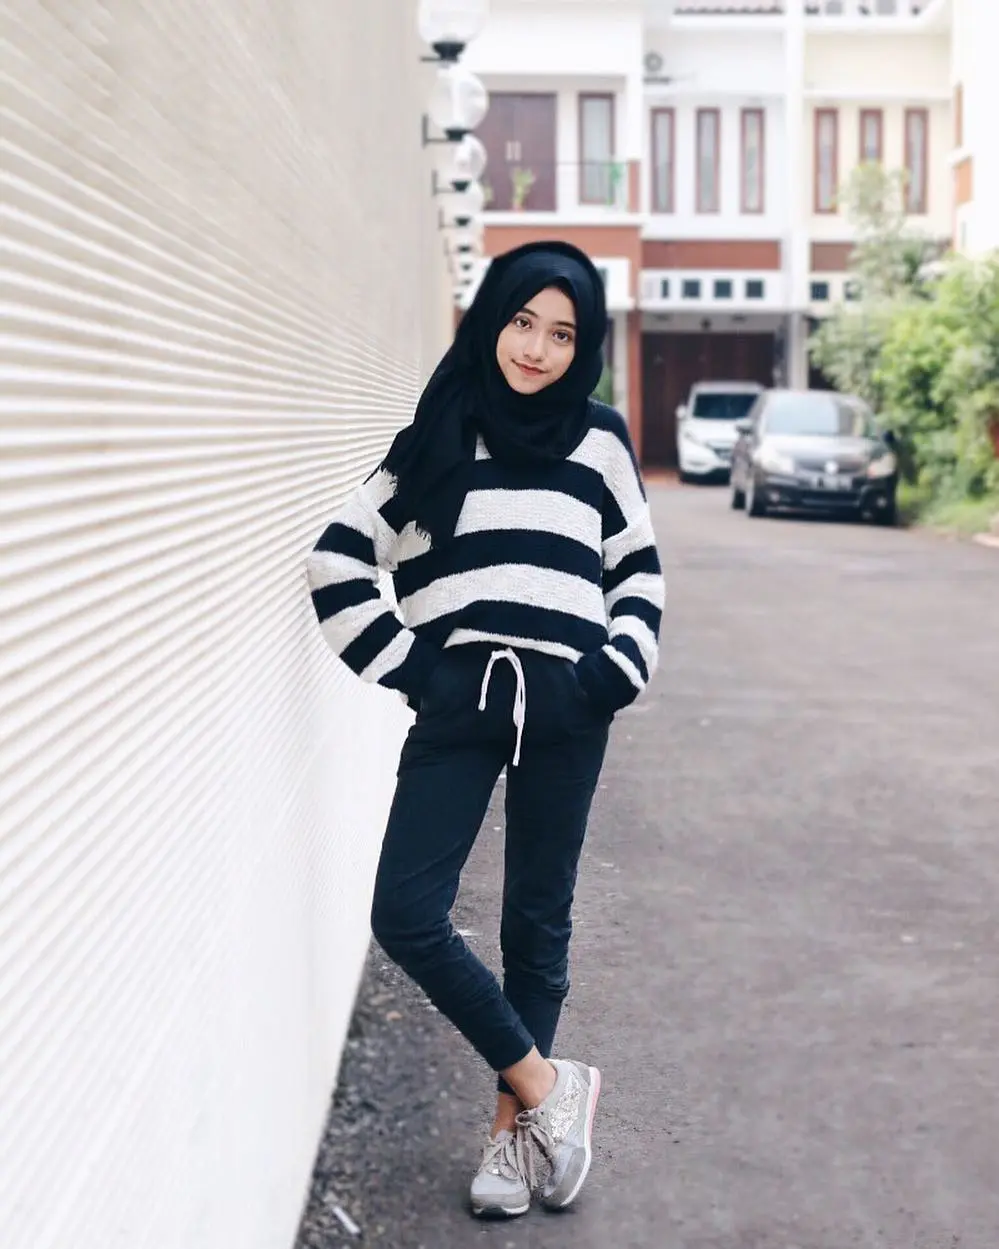 Pakai atasan oversize motif stripes hitam putih, lalu pilih sports wear warna gelap, keren ya gayanya. (sumber foto: @shireeenz/instagram)